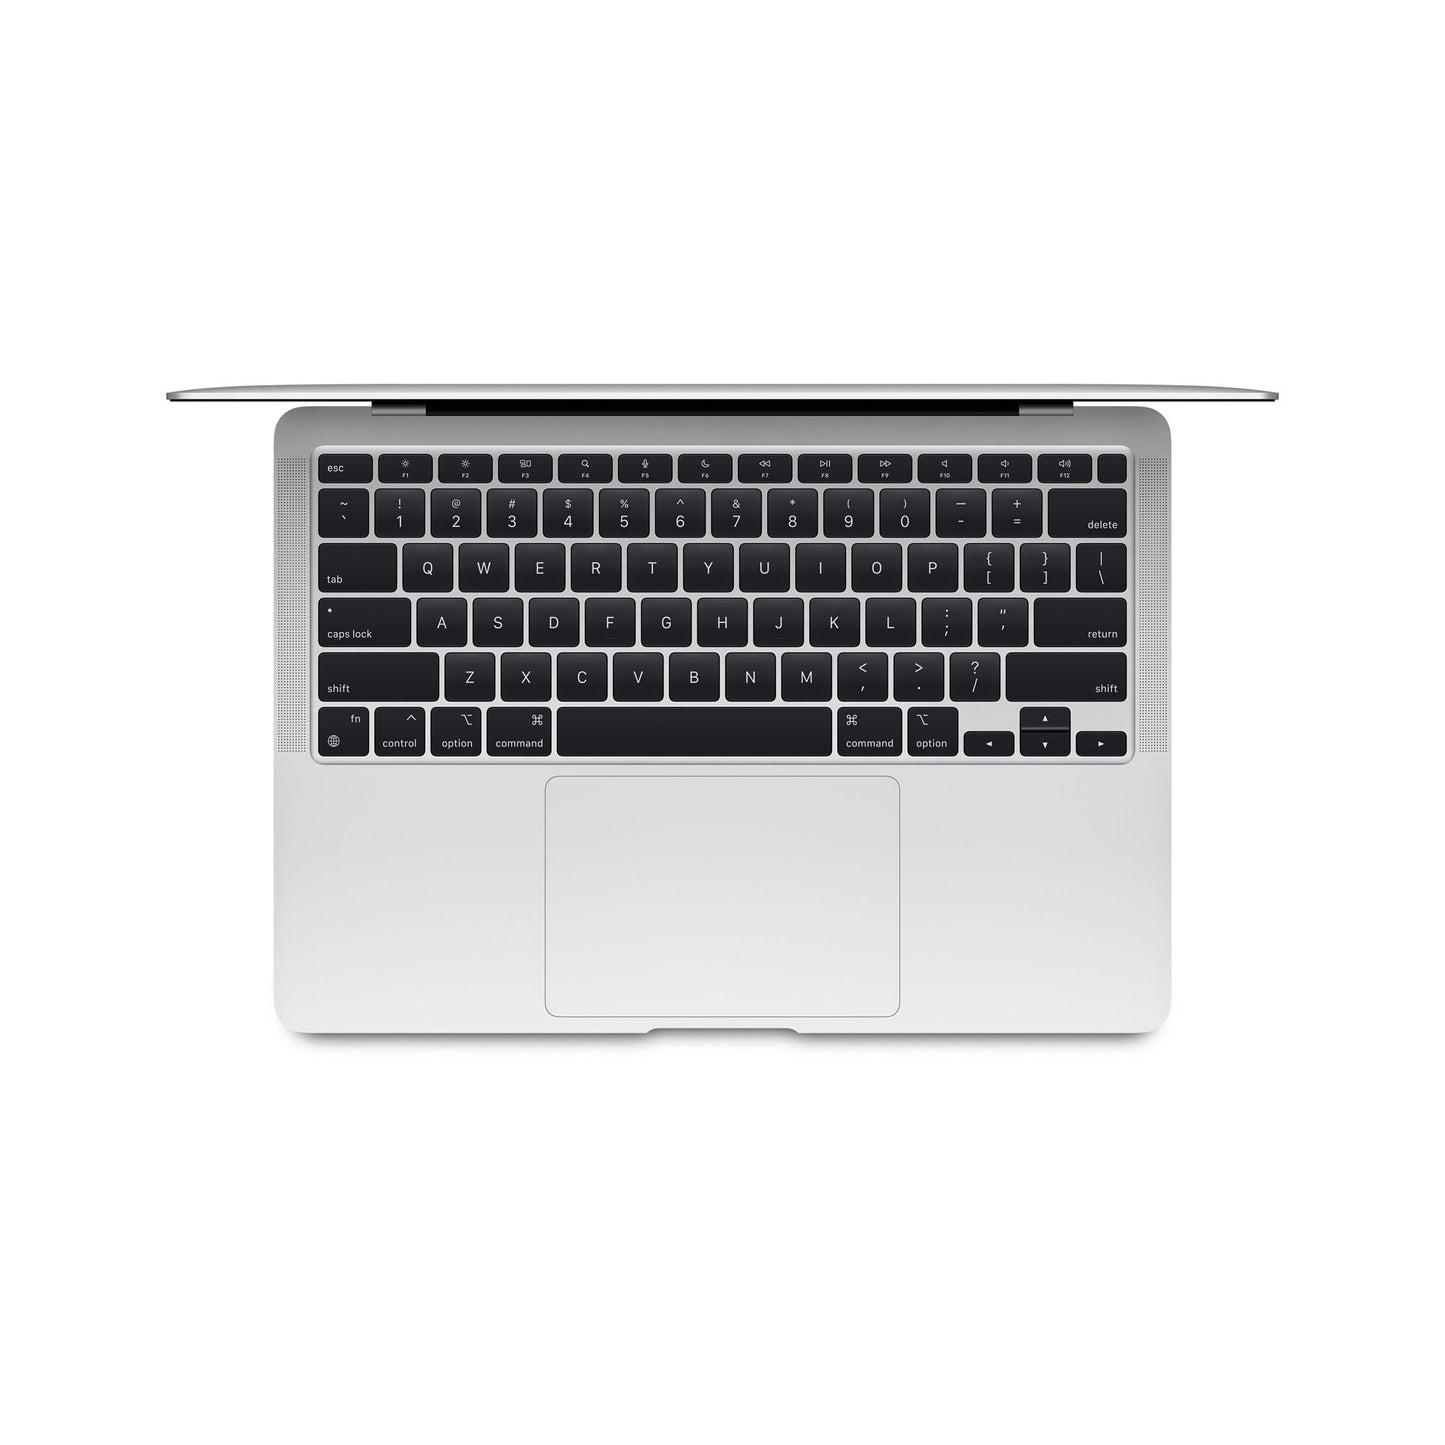 13-inch MacBook Air: Apple M1 chip with 8-core CPU and 7-core GPU 256GB - Silver